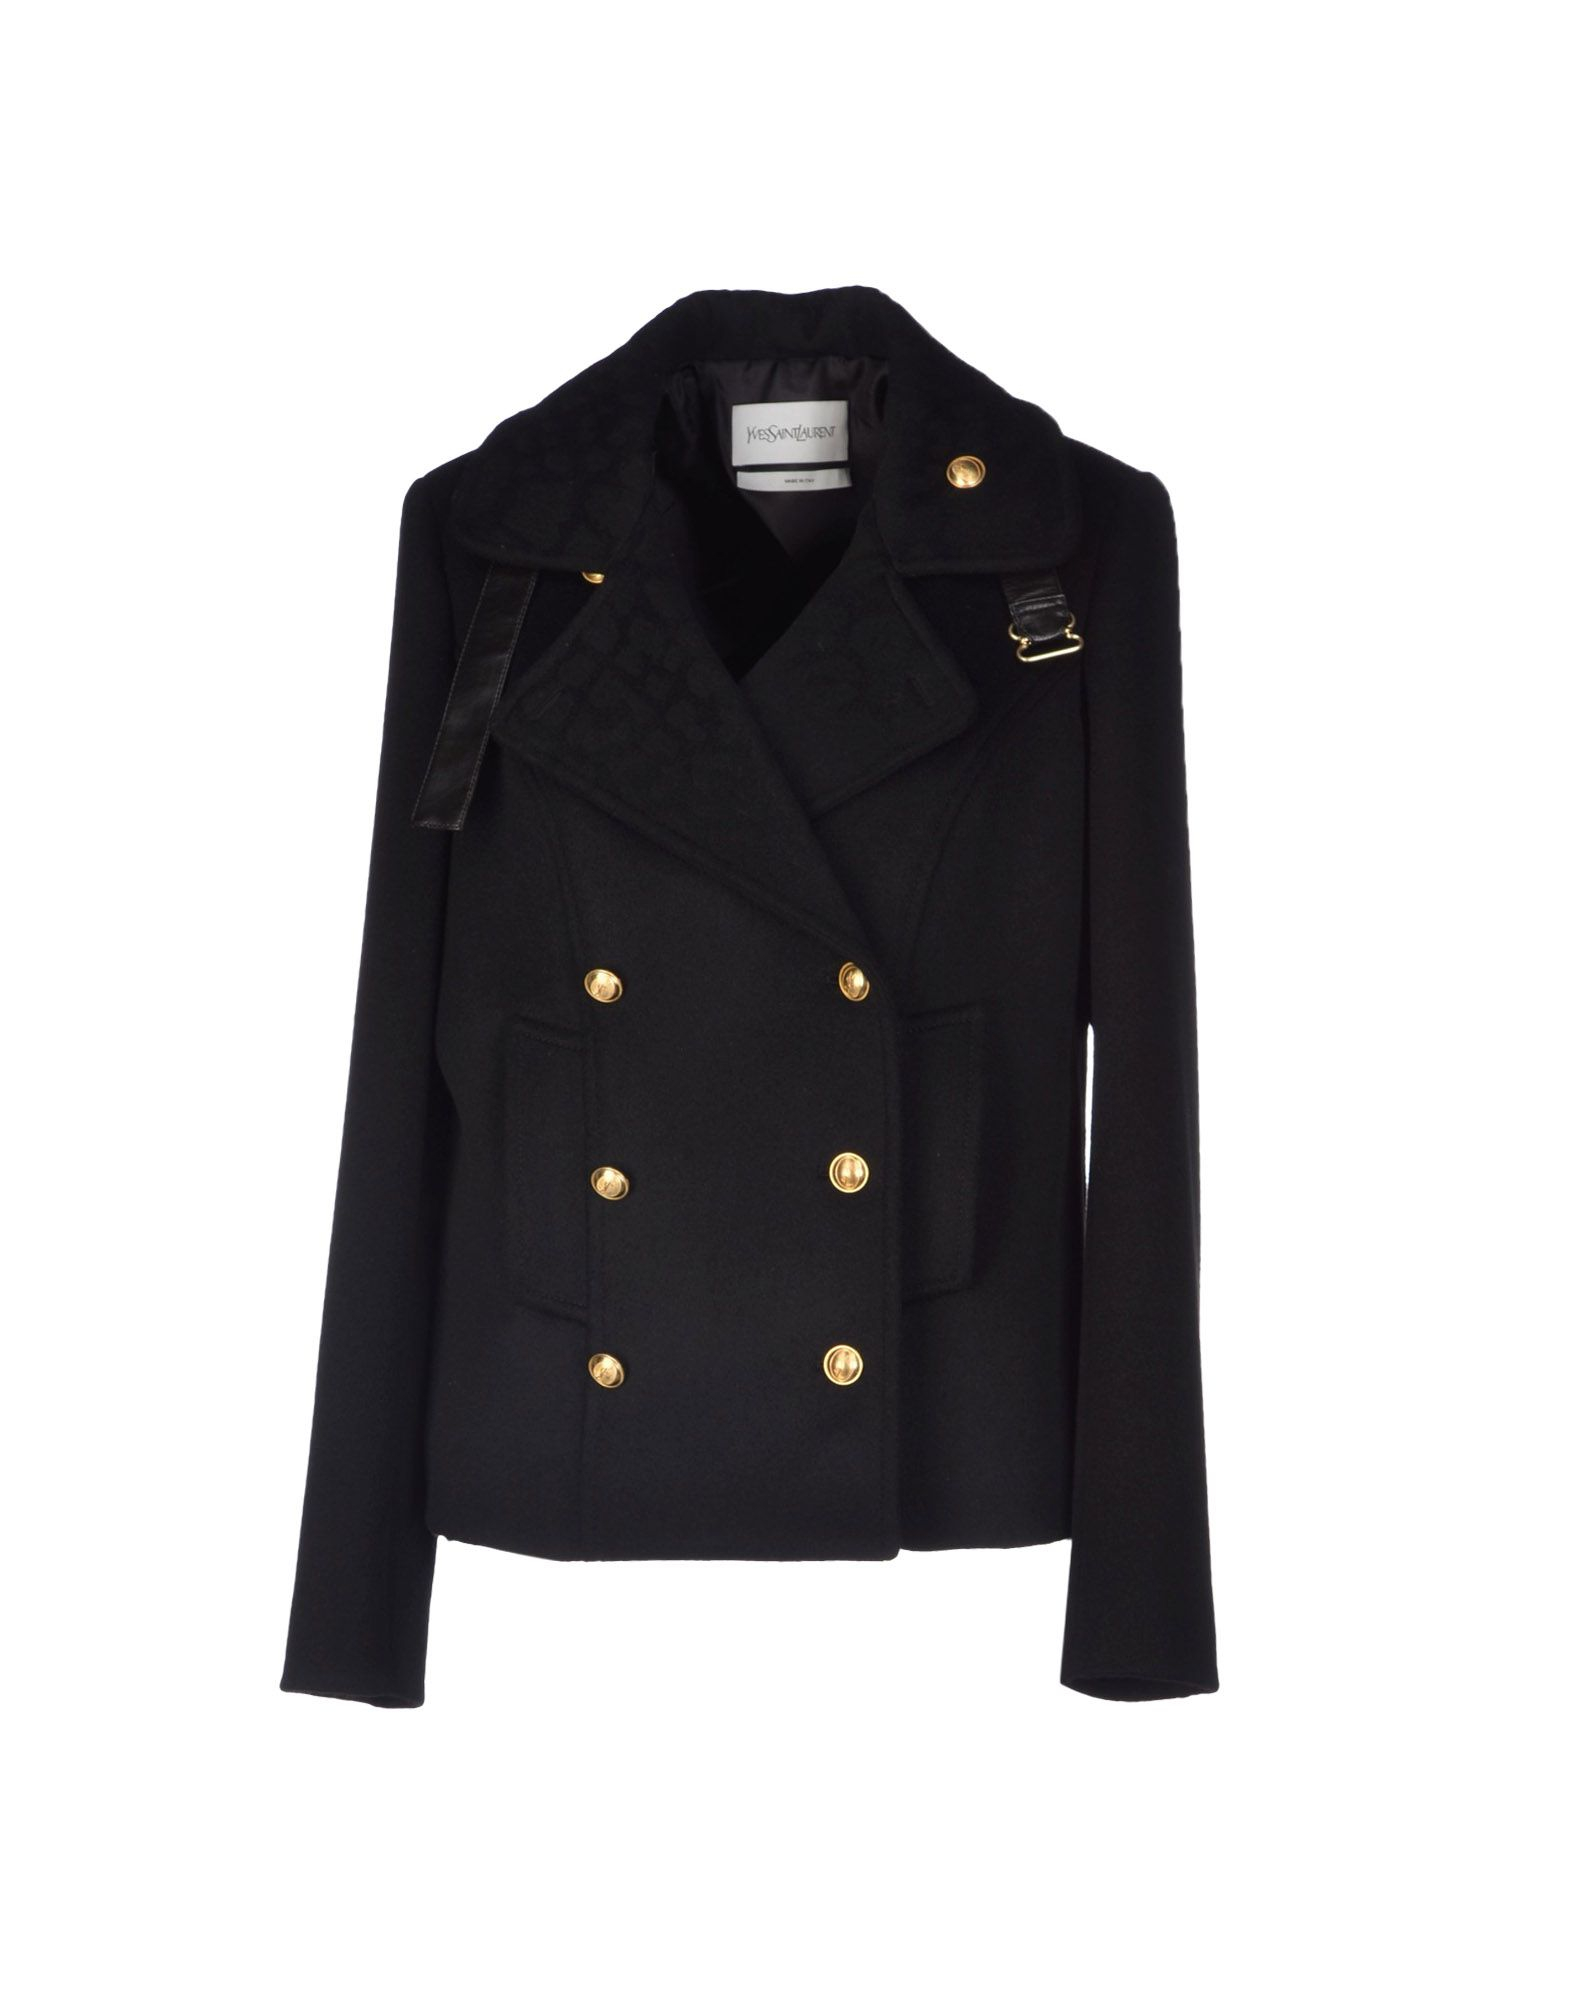 Yves Saint Laurent Rive Gauche Coat in Black | Lyst